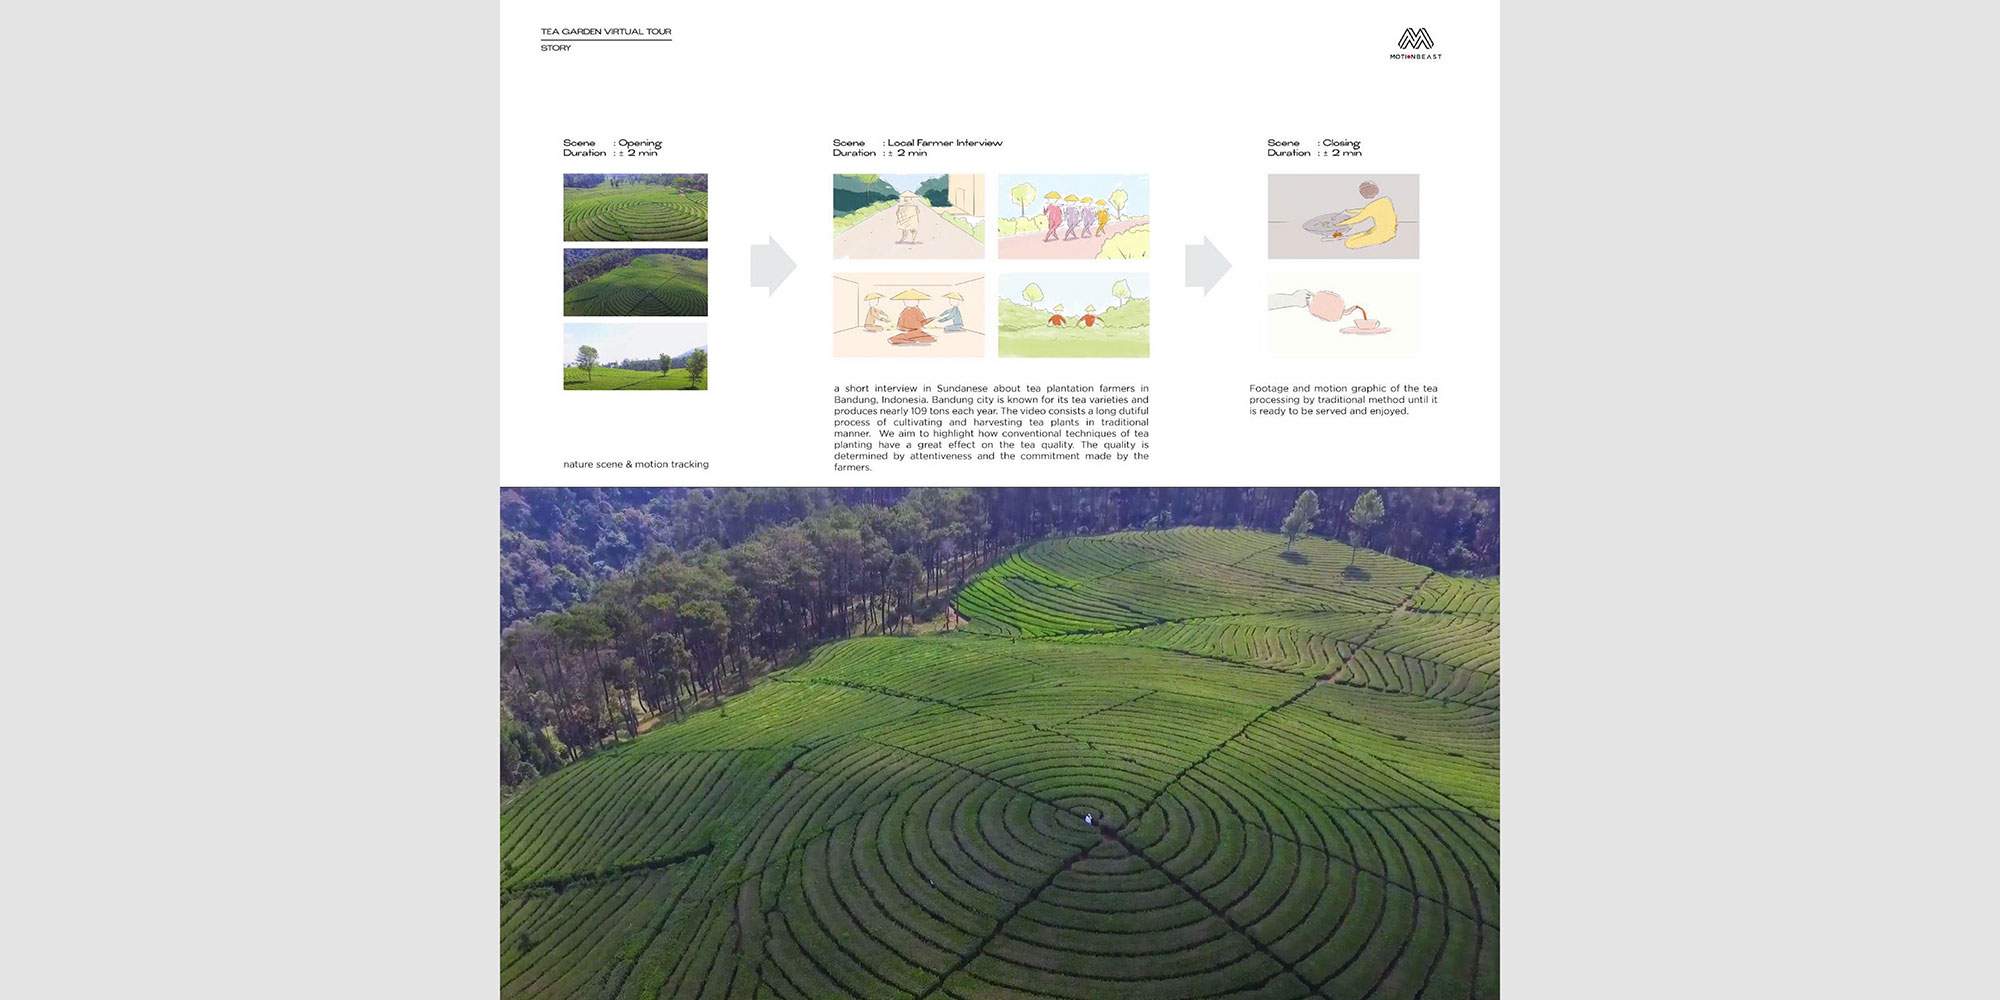 Virtual Tour journey of Tea Plantation in Indonesia, Motionbeast (ID)